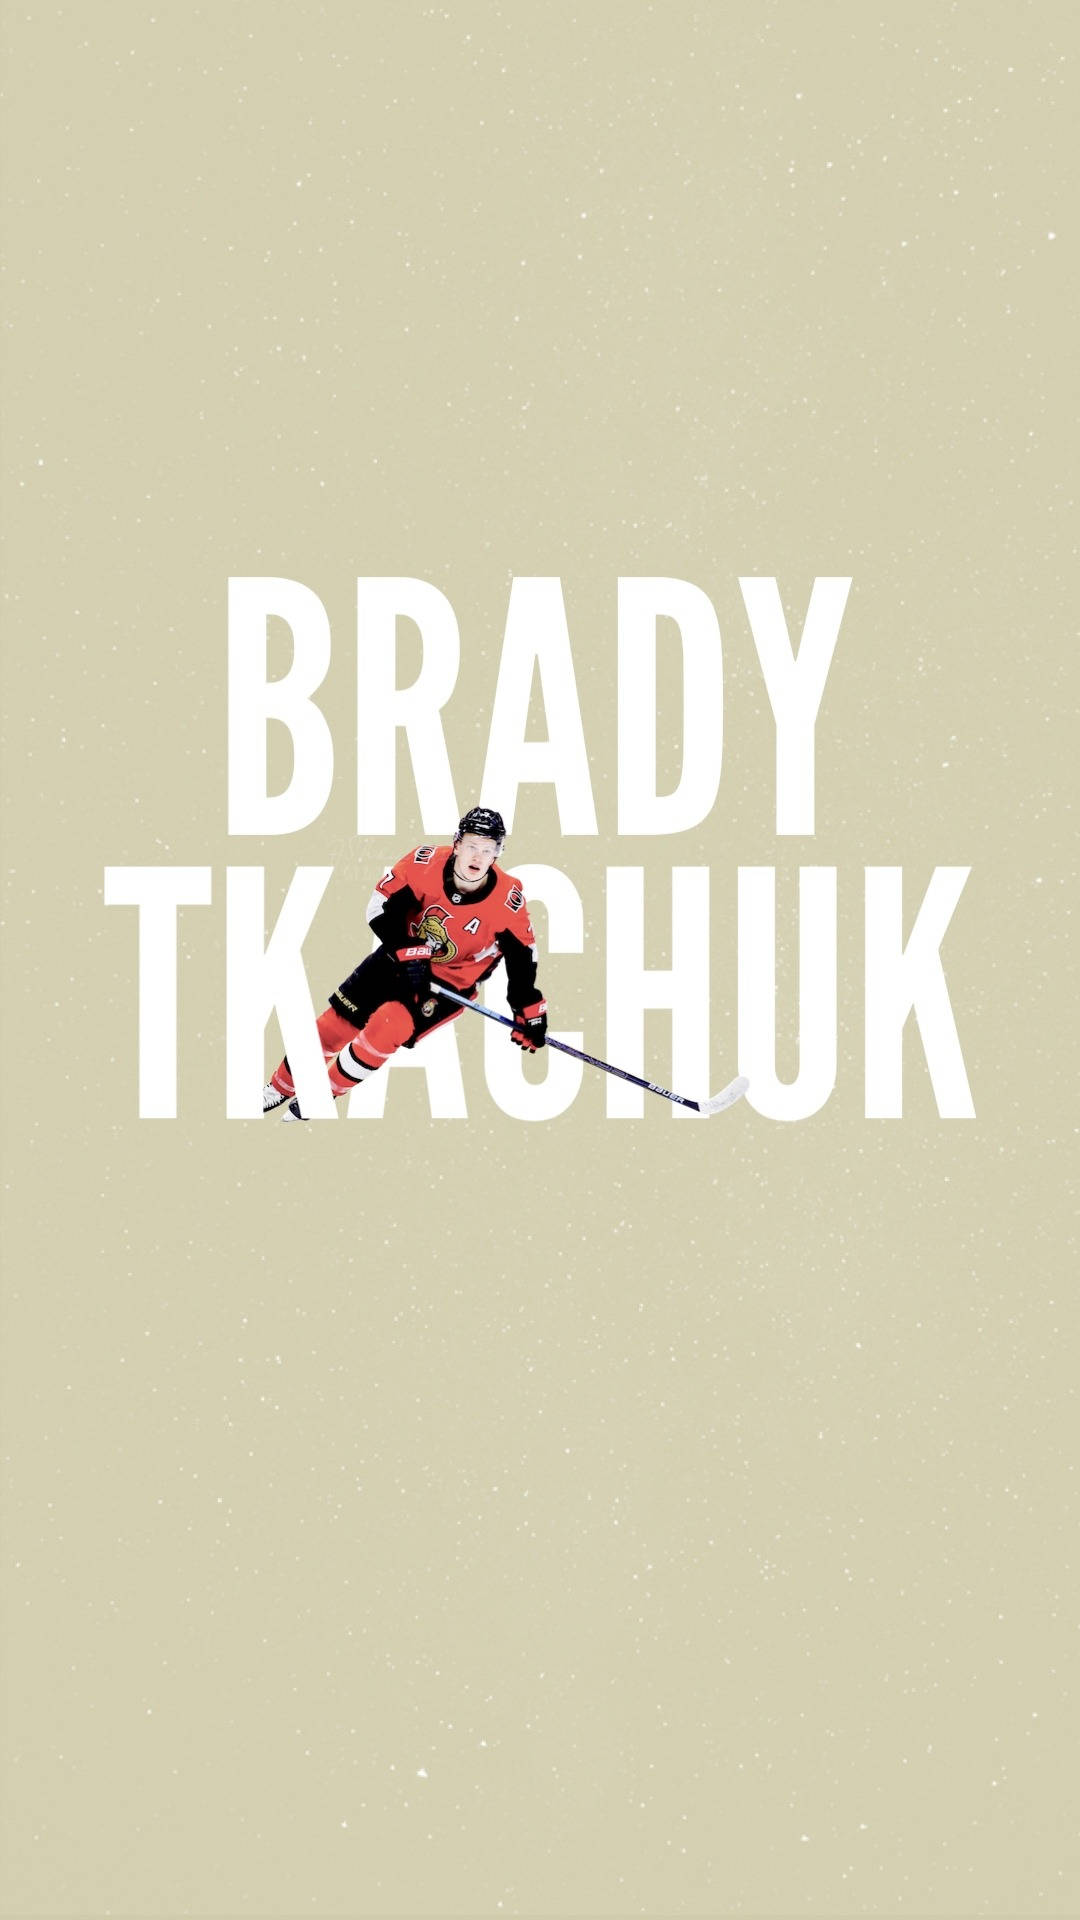 Bradytkachuk Ottawa Senators Fanart: Brady Tkachuk Ottawa Senators Fanart. Wallpaper